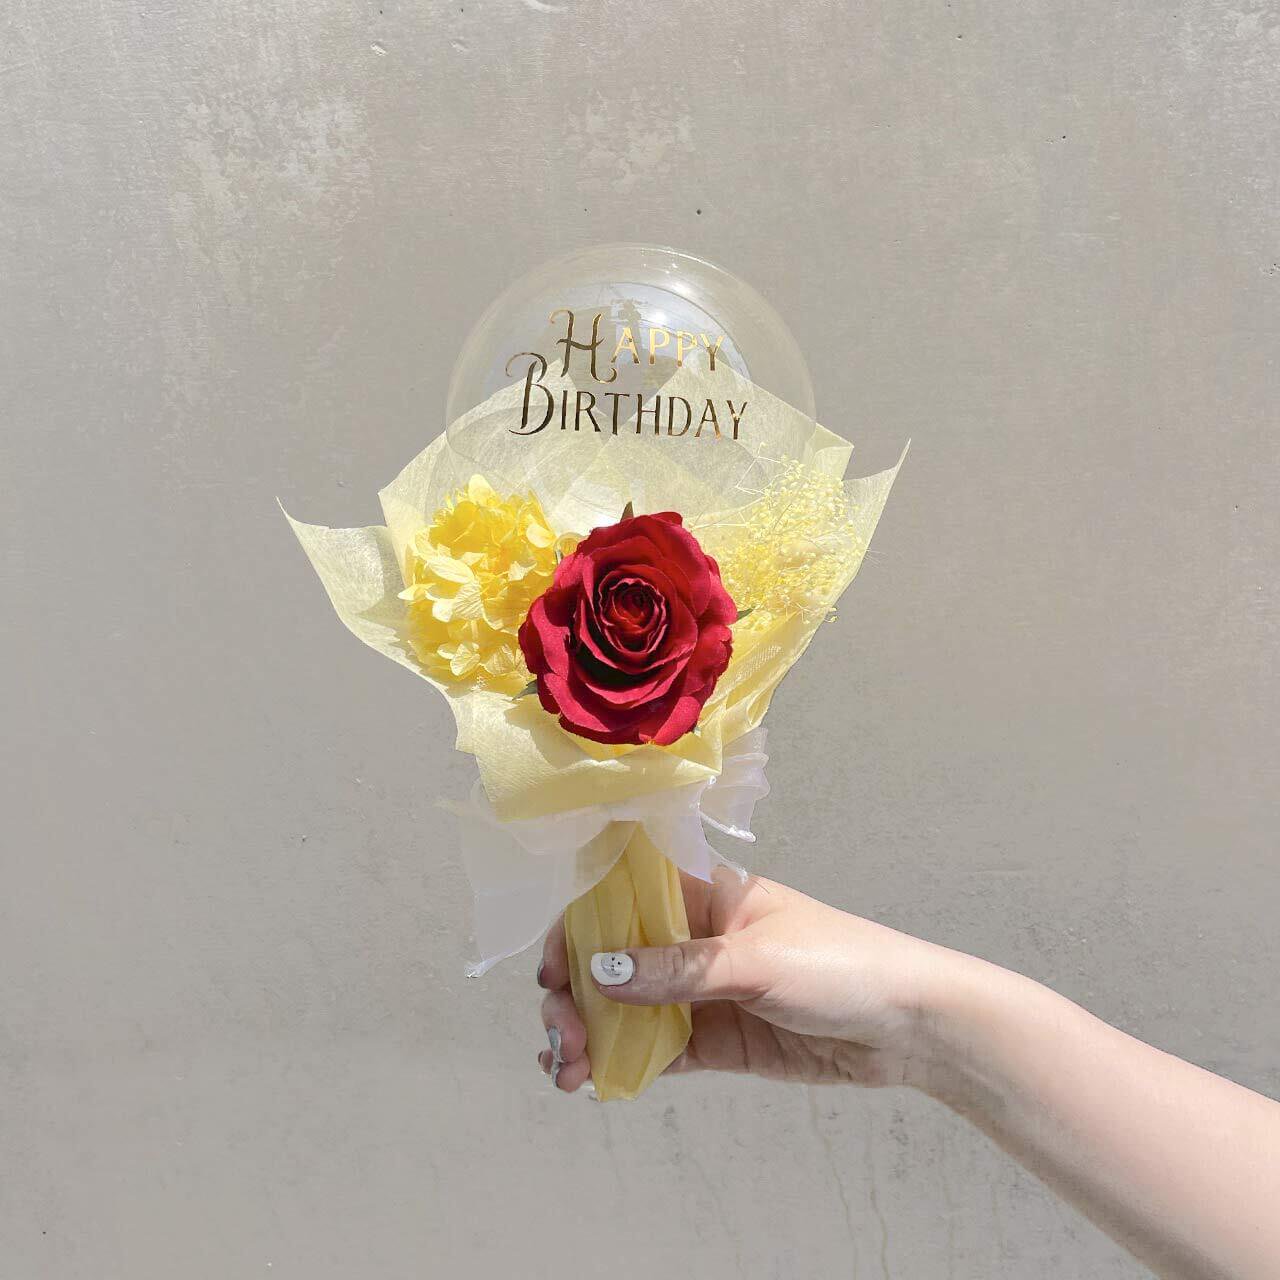 Beauty & Beast Mini Bouquet - Flower Balloon Bouquet - 美女と野獣カラーフラワーバルーンブーケ